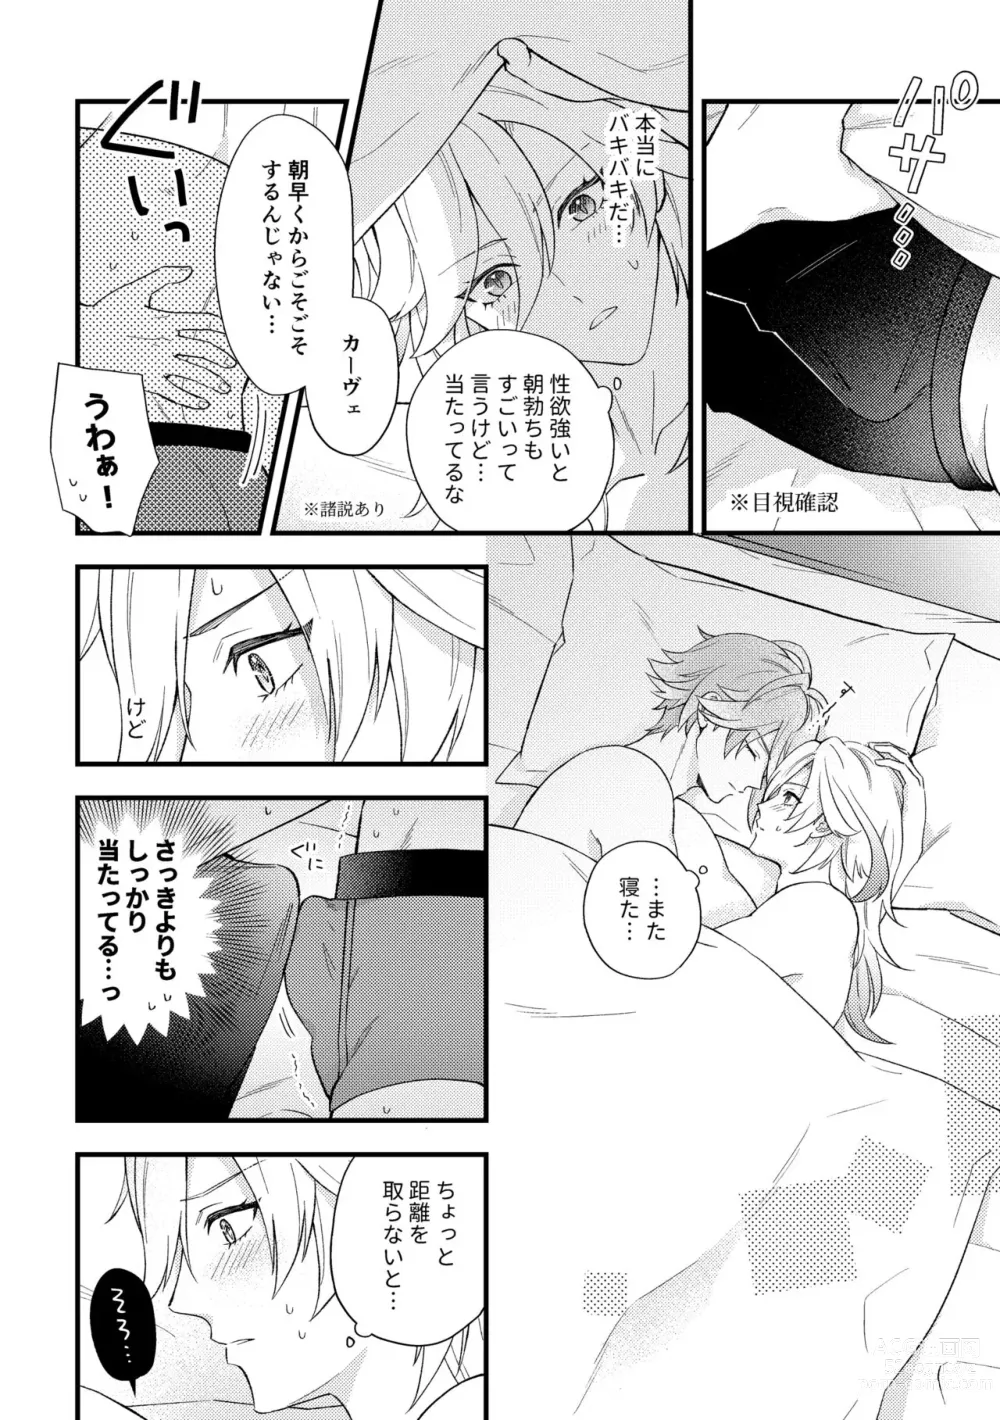 Page 2 of doujinshi Morning Glory